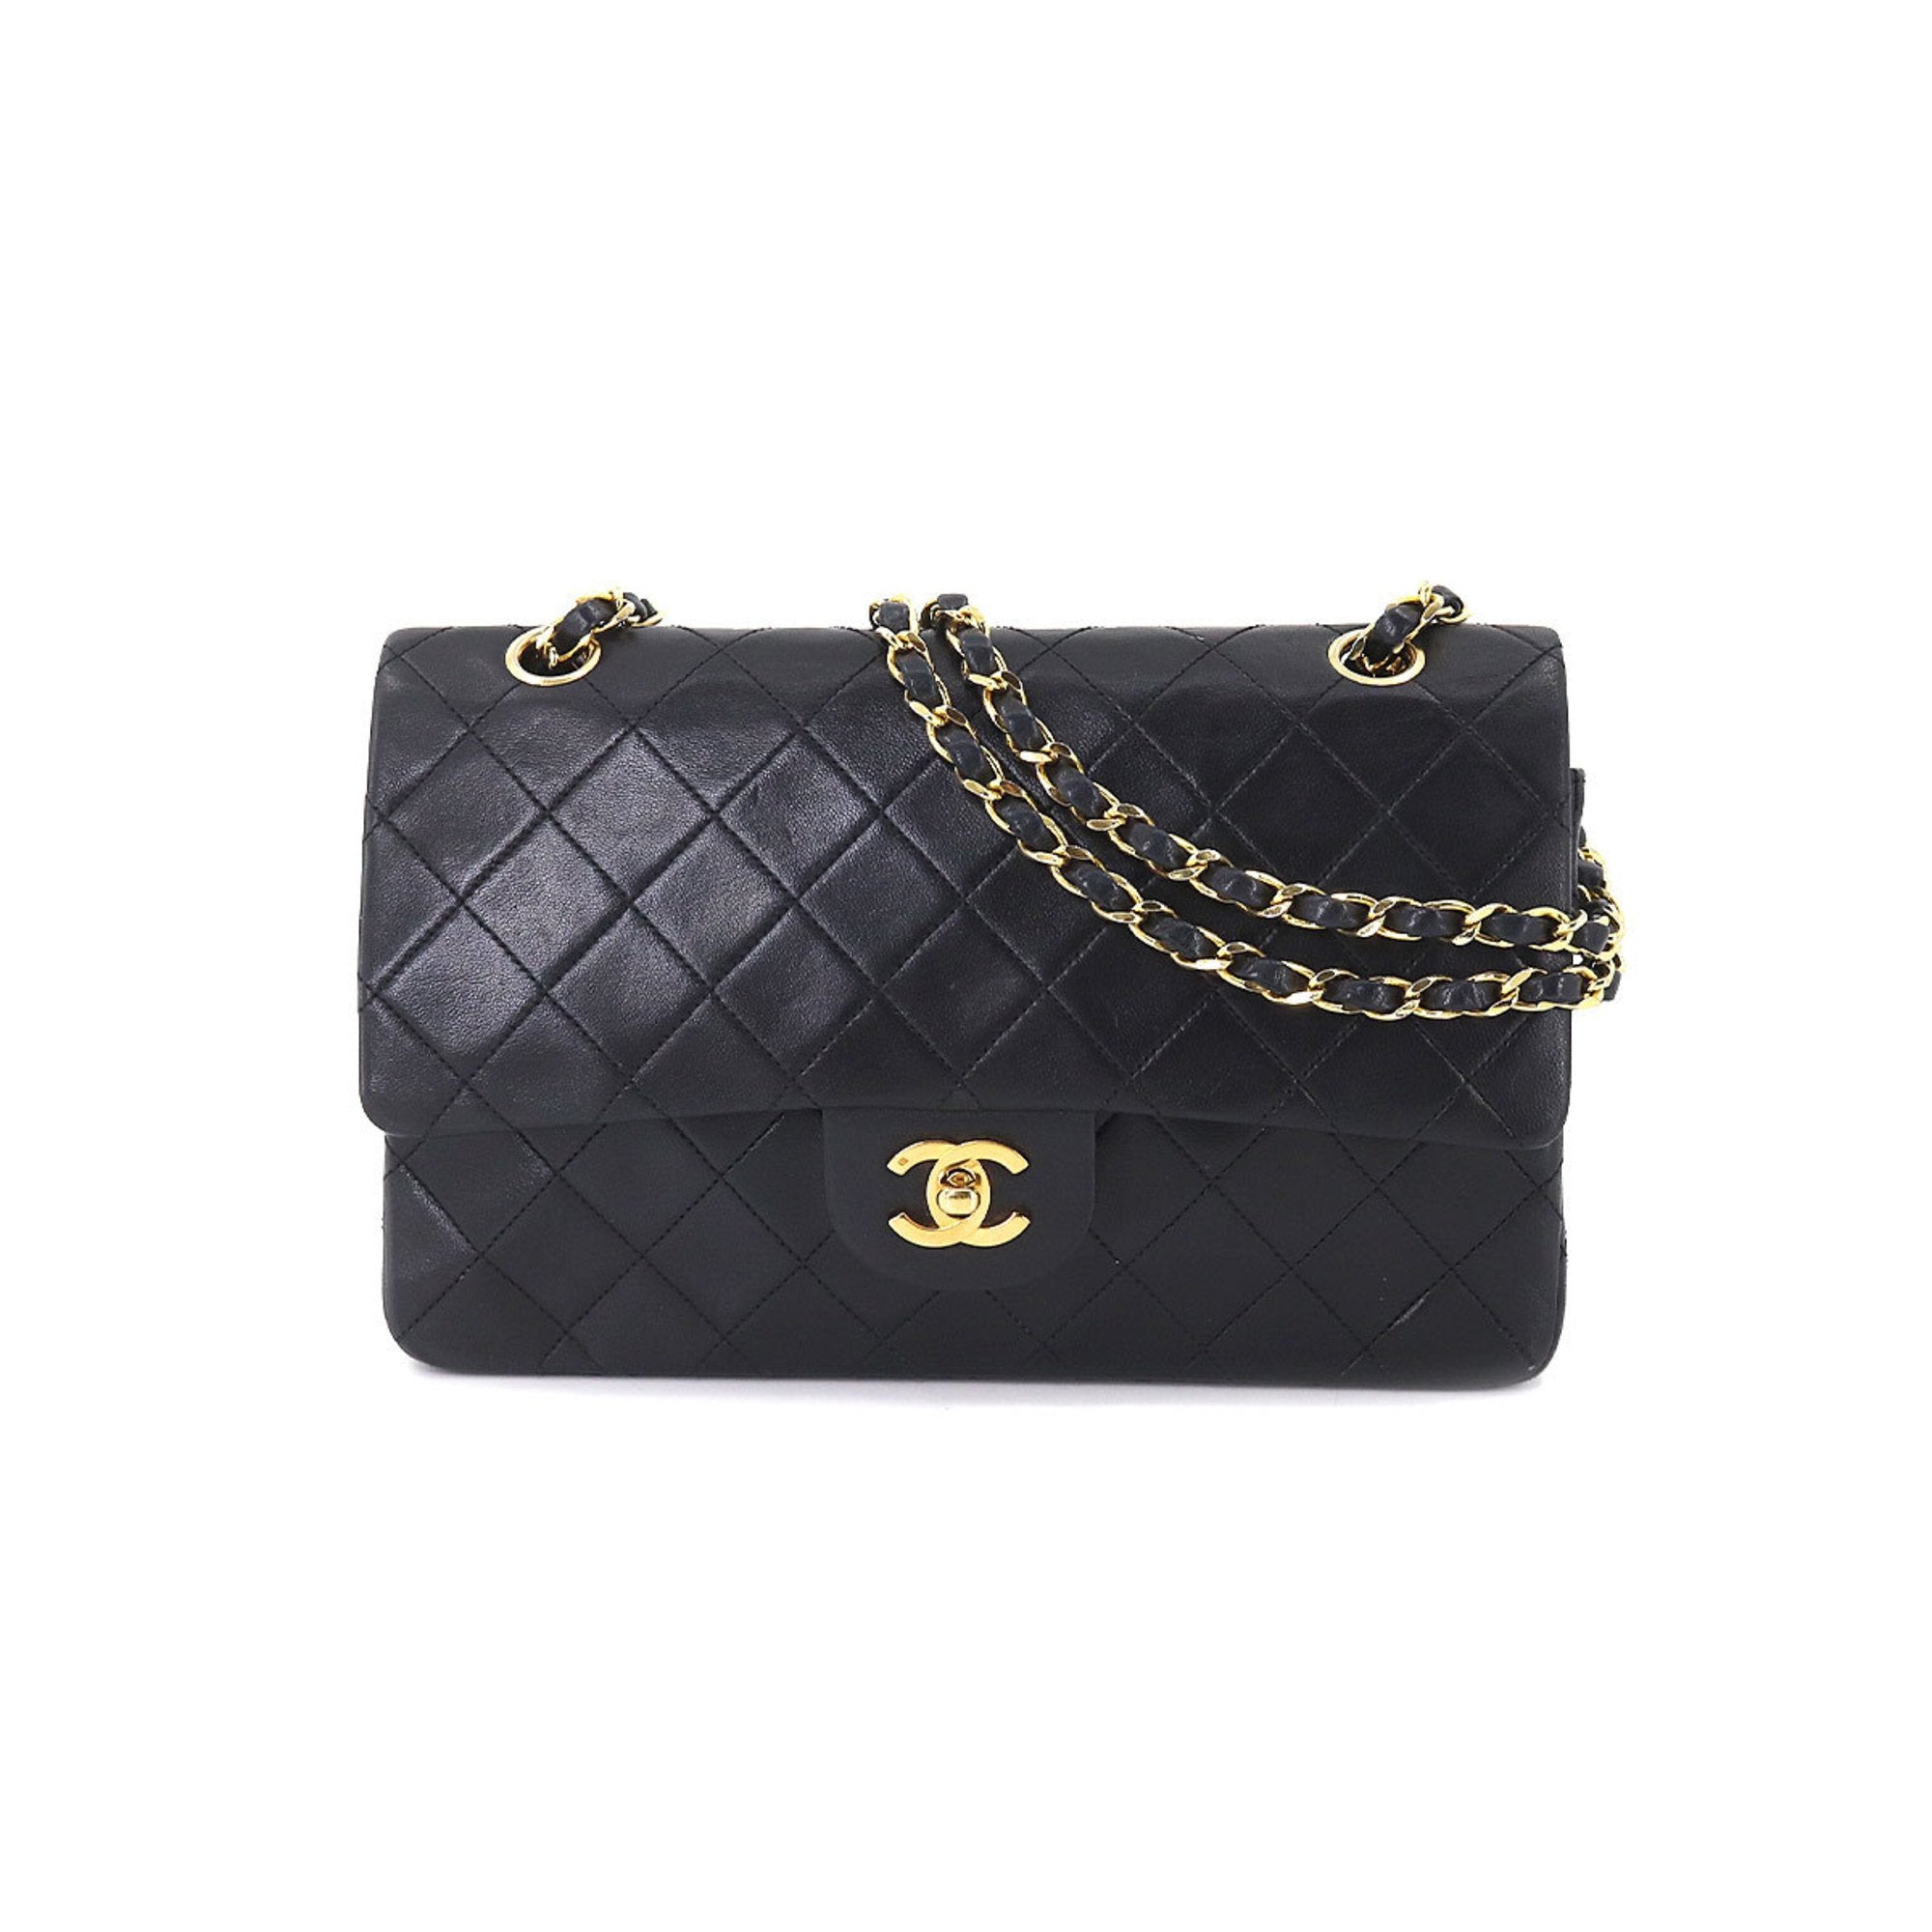 Chanel matelasse 25 chain shoulder bag leather black A01112 gold metal